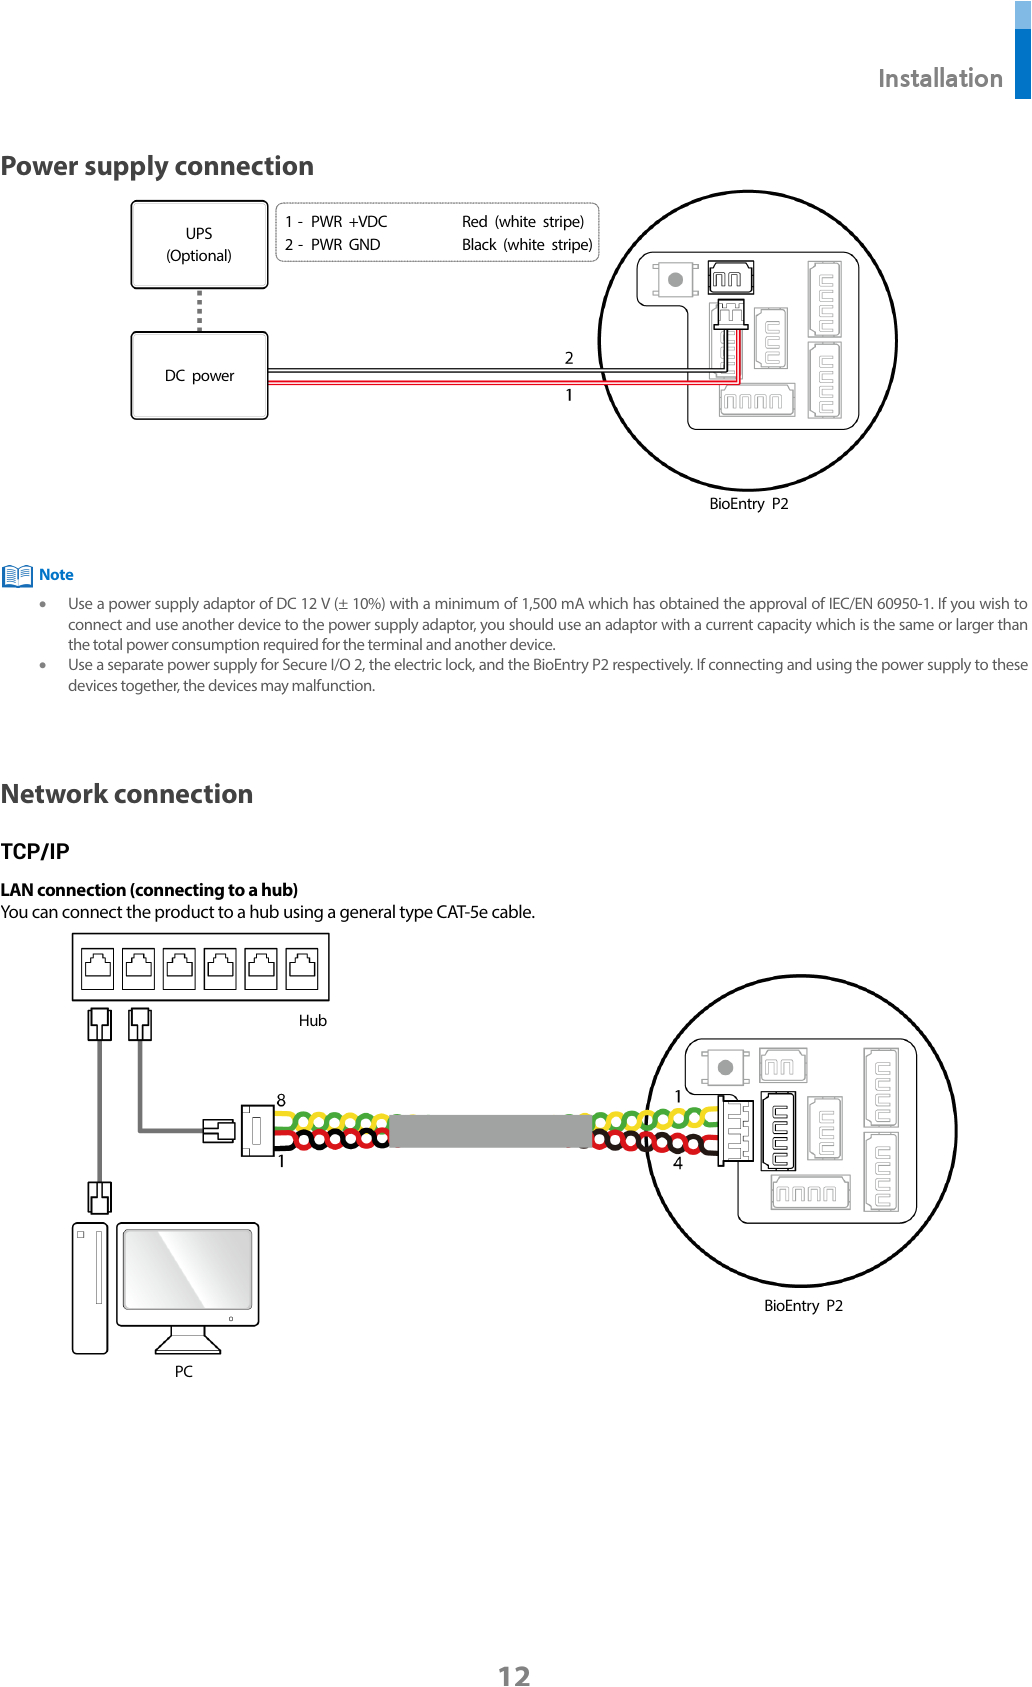 suprema bioentry plus wiring diagram fresh bep2 od bioentry p2 user manual suprema inc